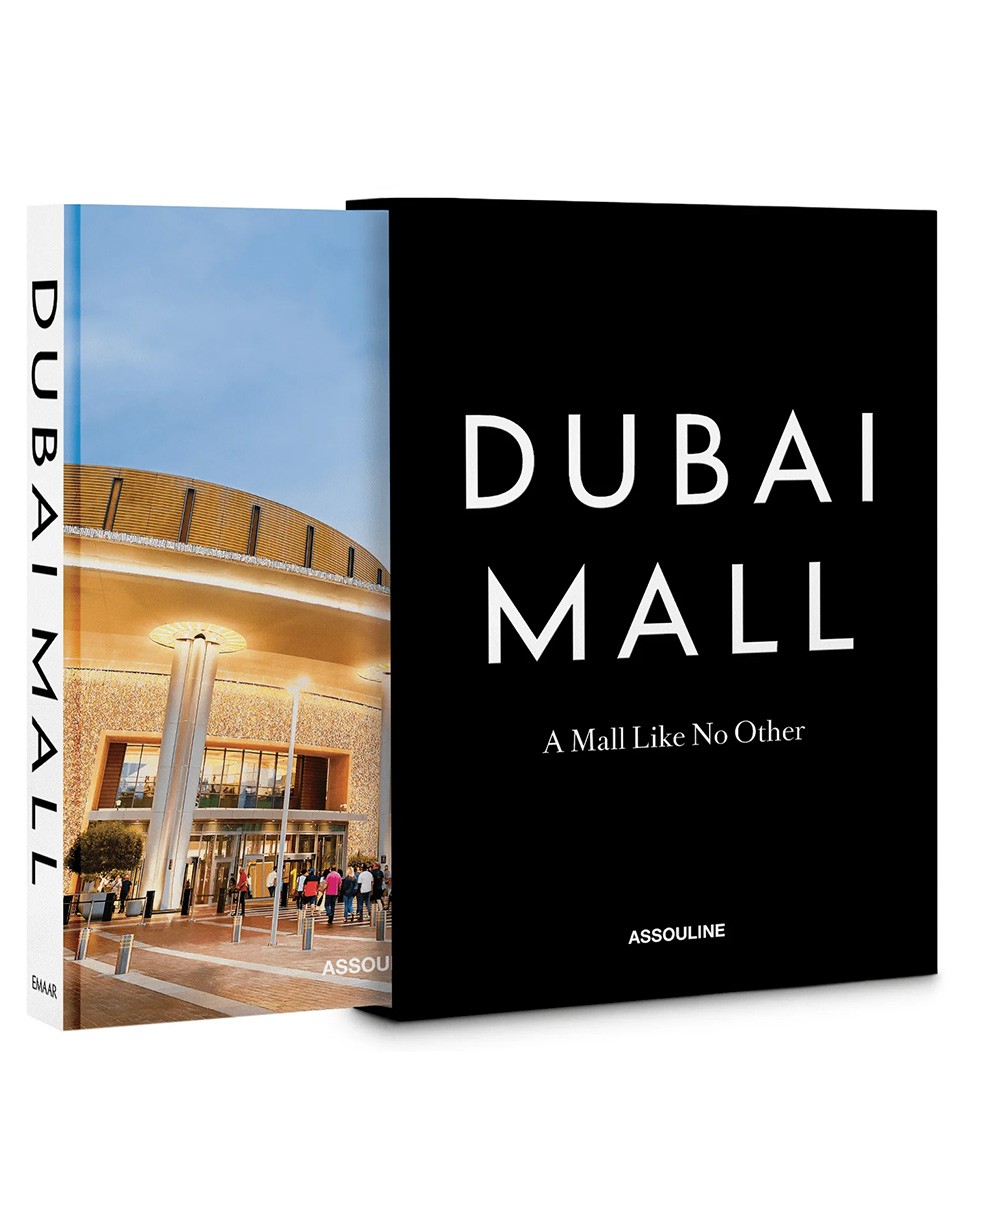 Verpackung des Coffee Table Books „Dubai Mall“ von Assouline im RAUM concept store 